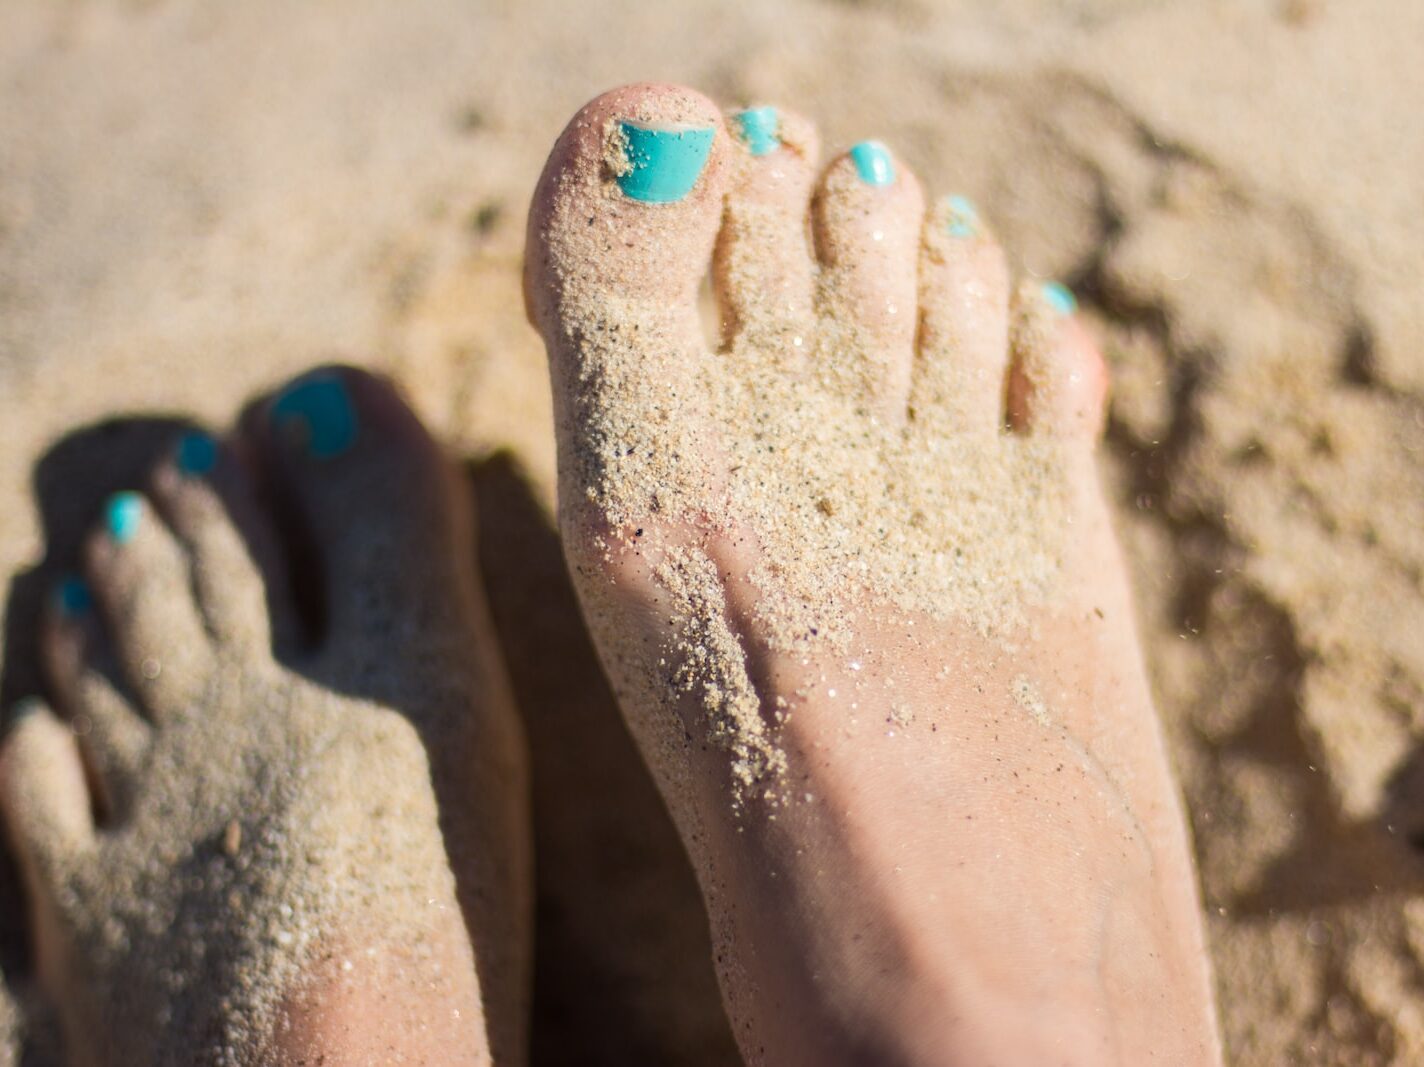 person sky-blue nail polish feet on brown sand